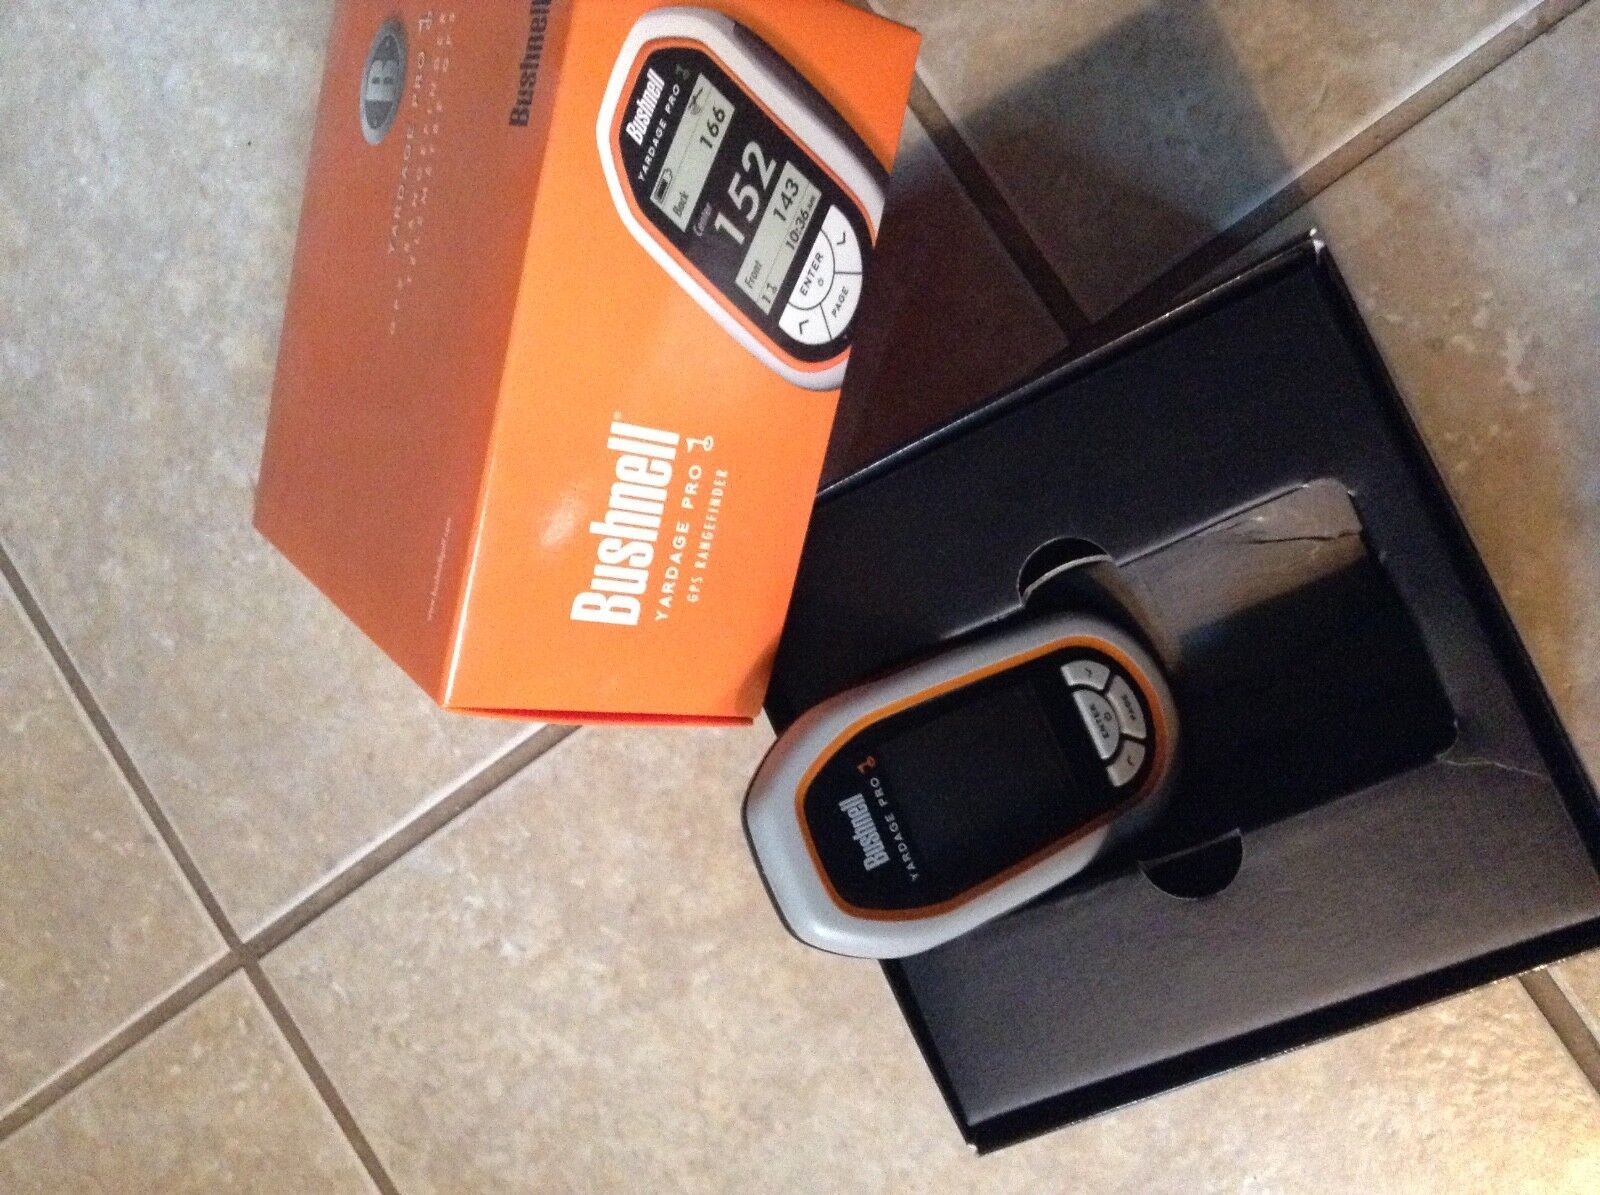 Bushnell Yardage Pro Golf GPS Rangefinder Unit Non Working(Orange/Black)